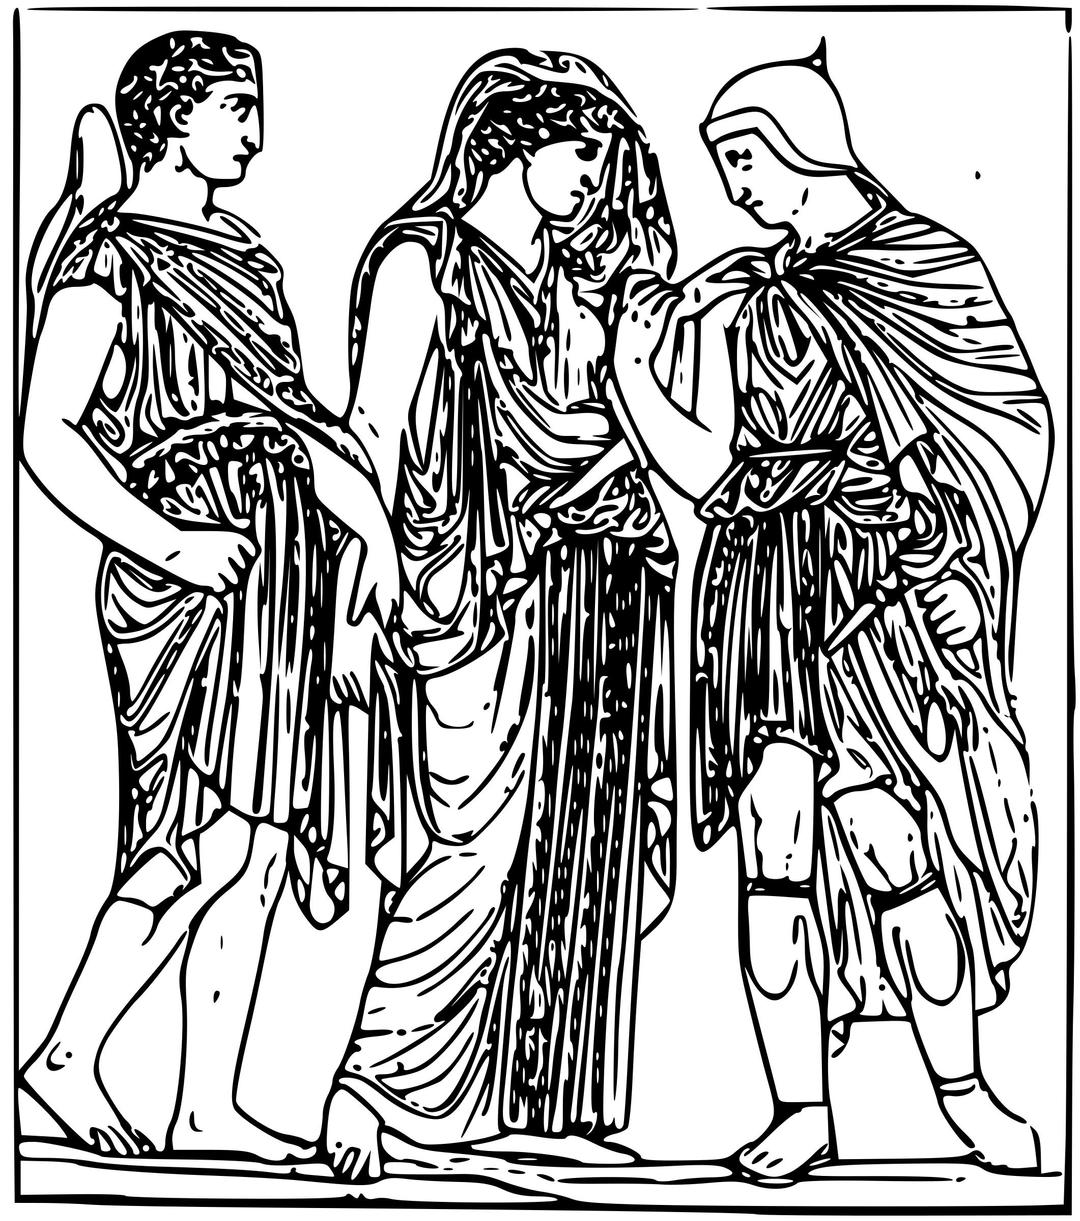 Hermes, Orpheus and Eurydice png transparent